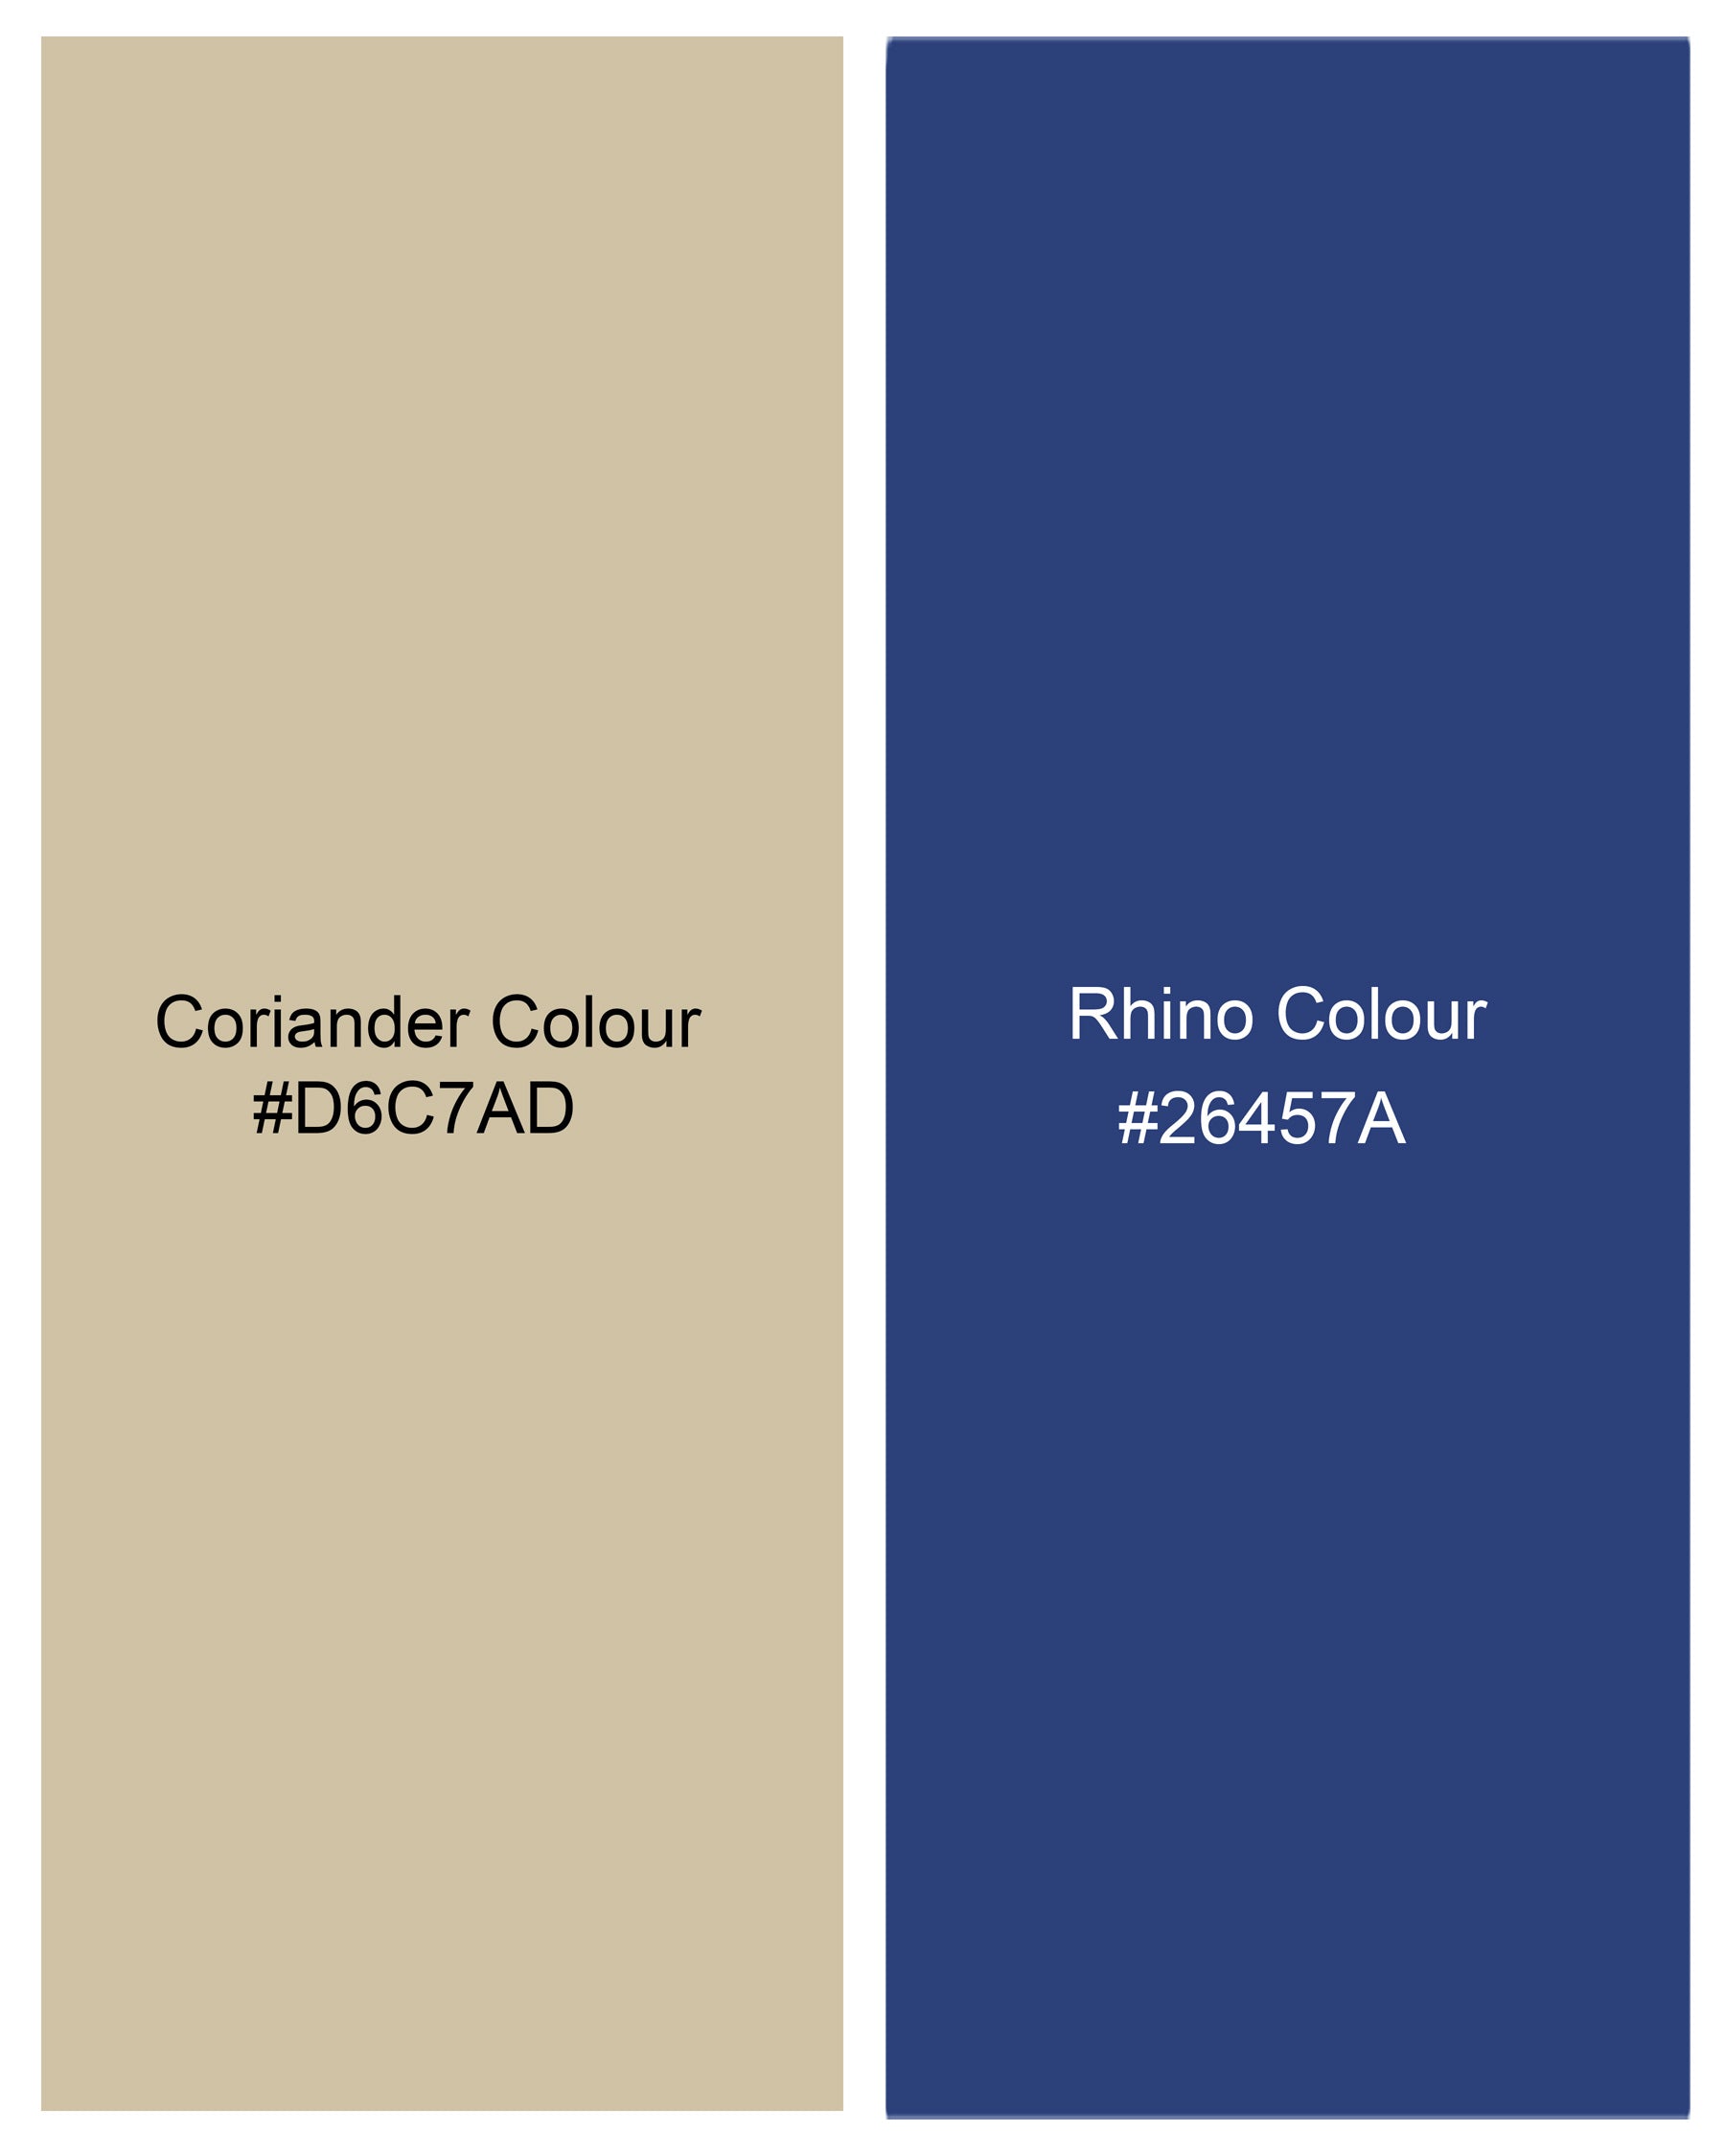 Coriander Light Brown with Rhino Blue Plaid Waistcoat  V2155-36, V2155-38, V2155-40, V2155-42, V2155-44, V2155-46, V2155-48, V2155-50, V2155-52, V2155-54, V2155-56, V2155-58, V2155-60